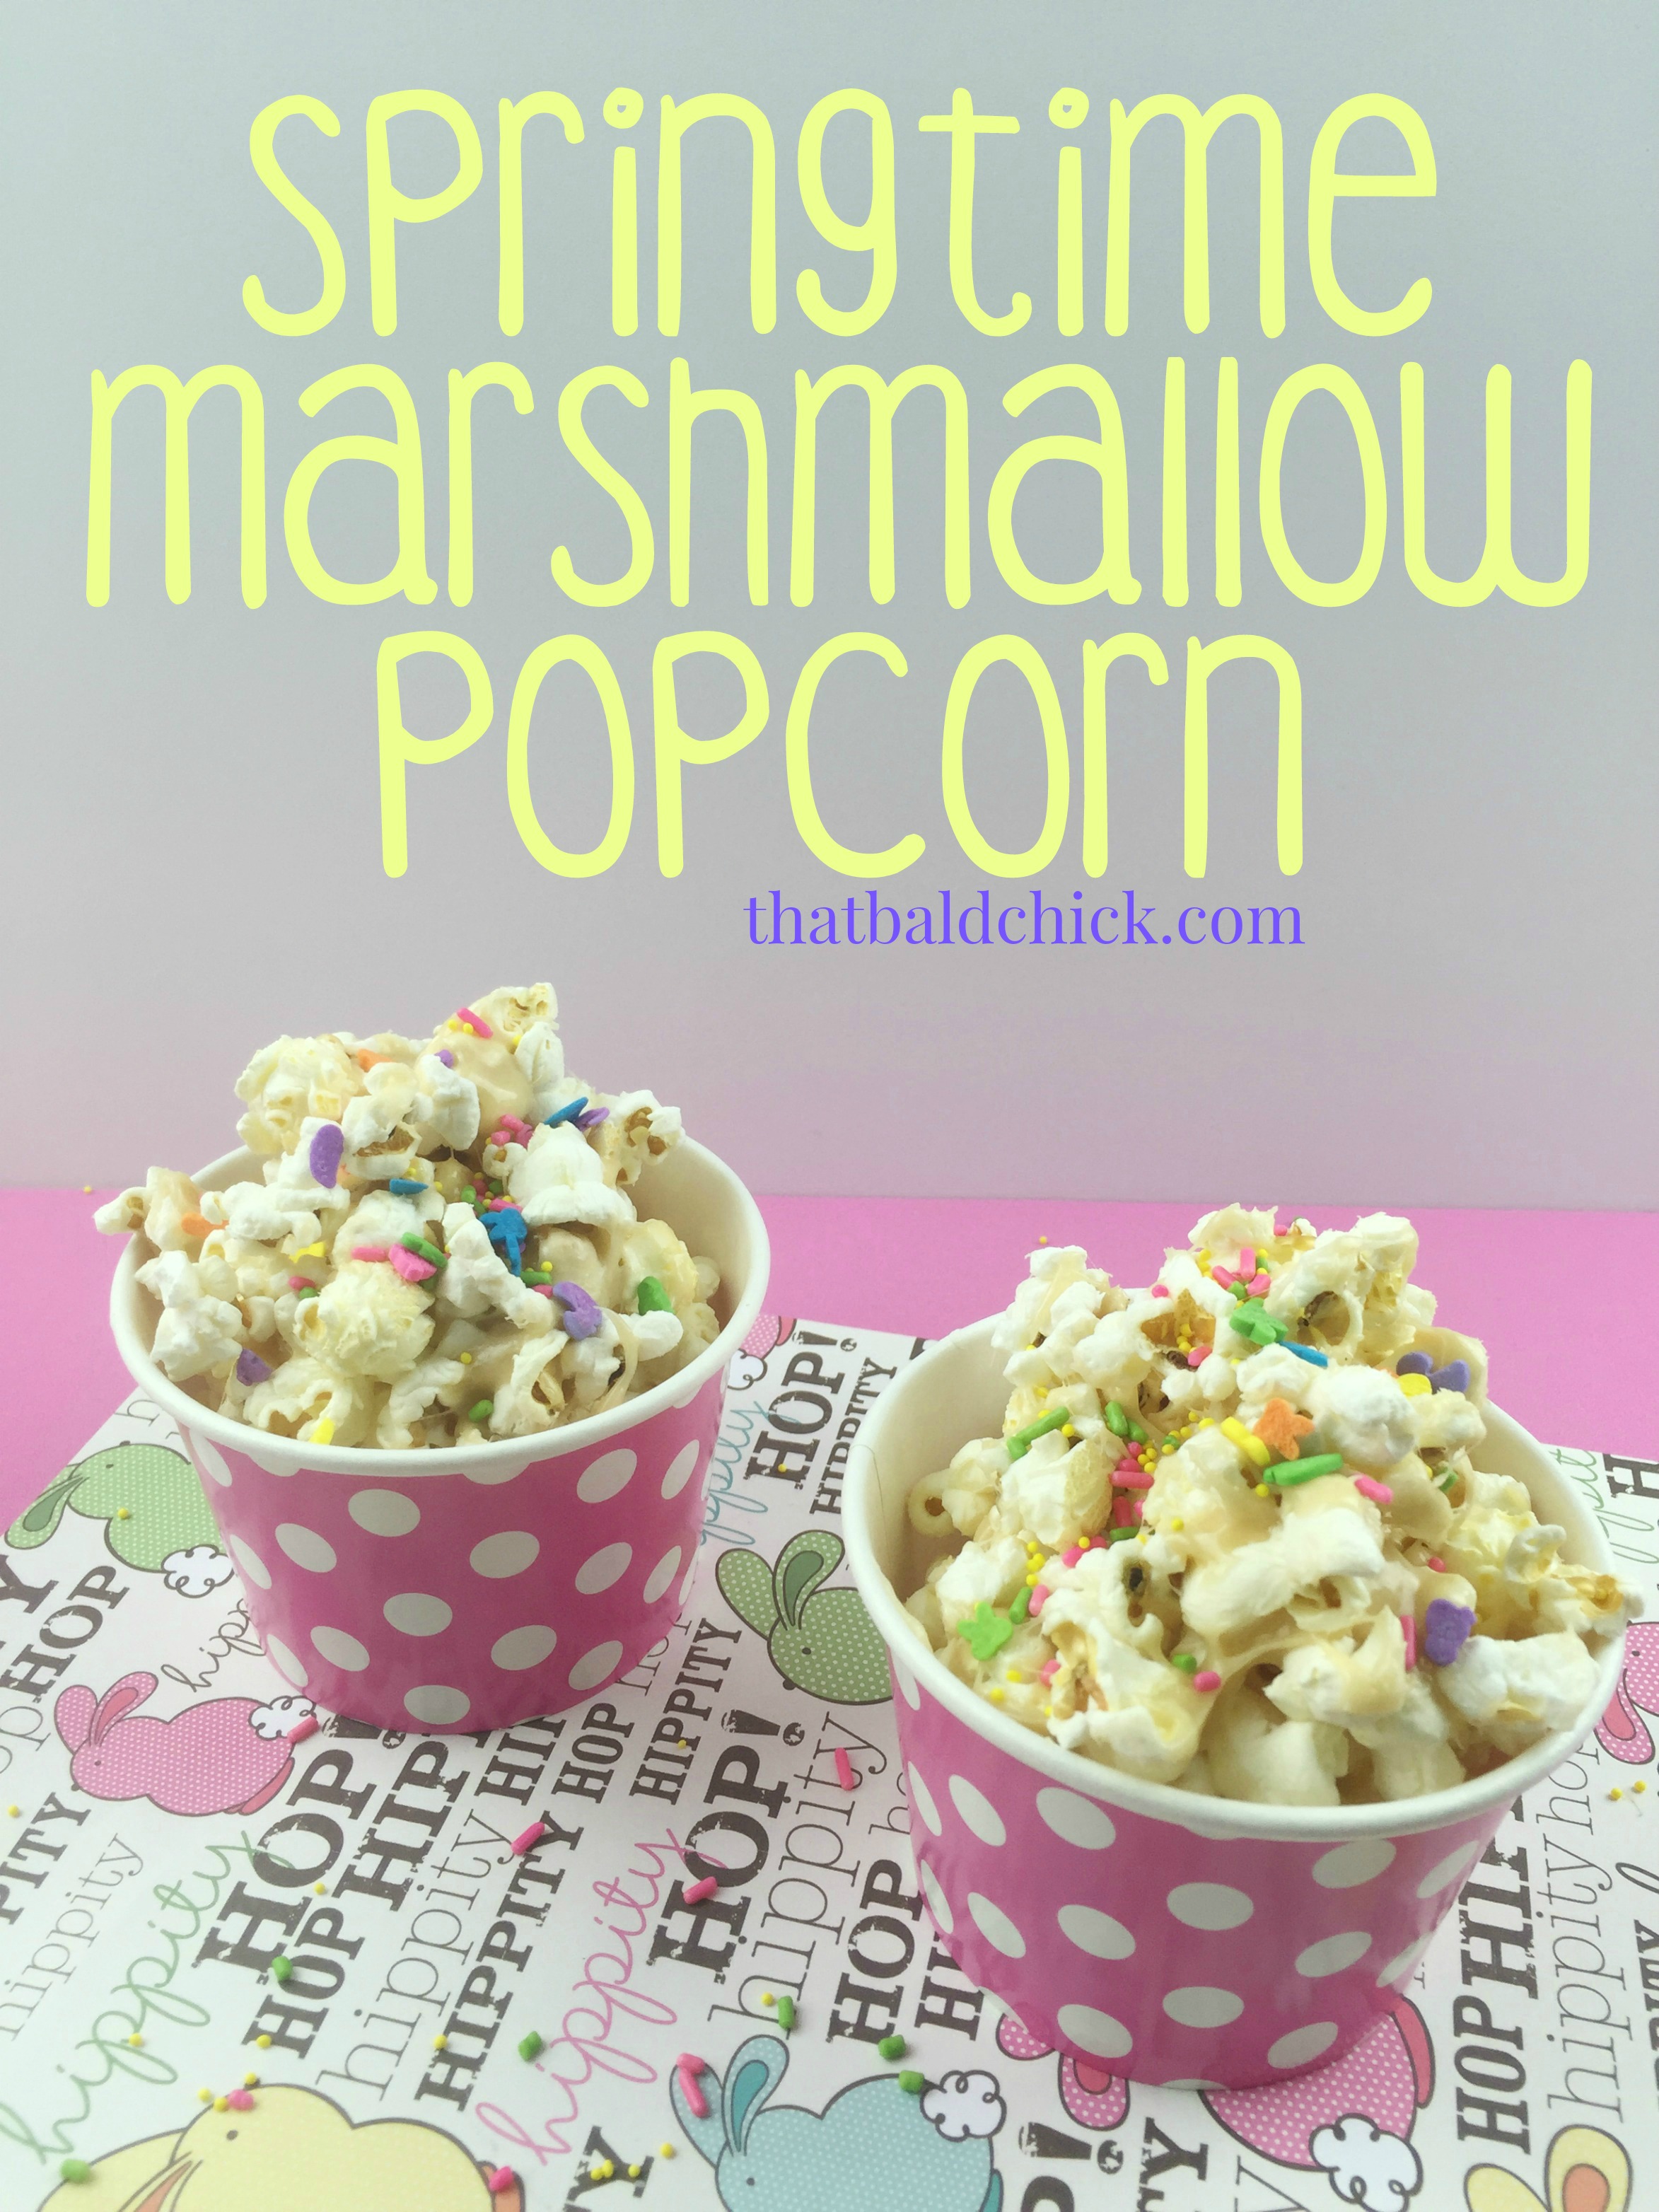 Springtime Marshmallow Popcorn Recipe @thatbaldchick